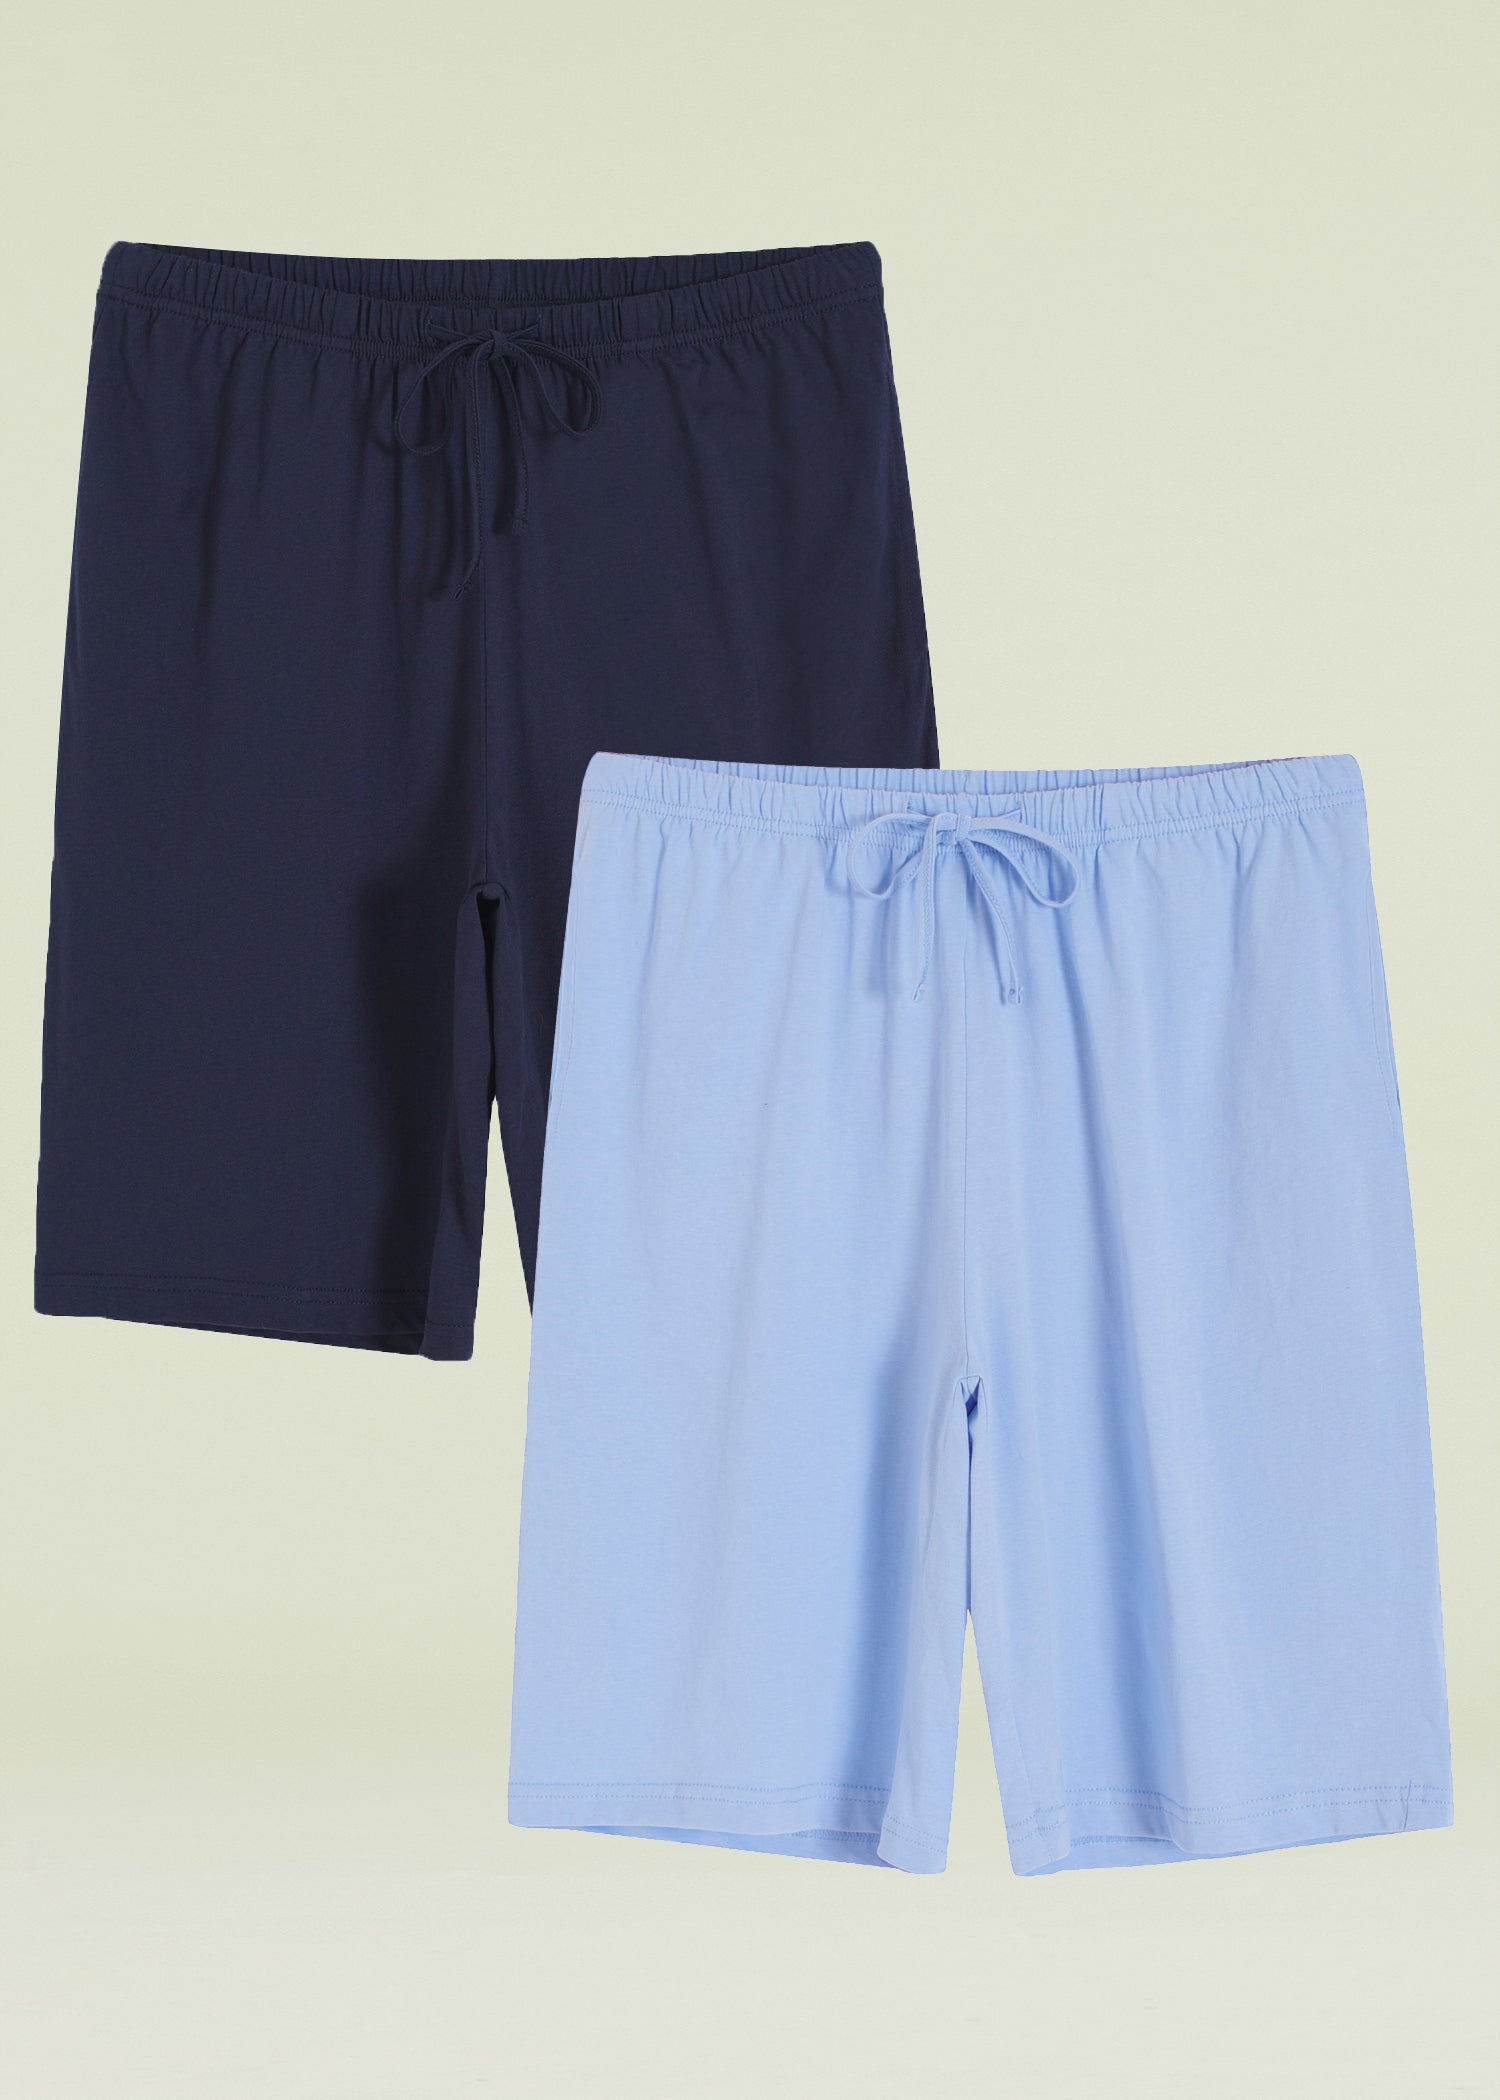 Women Sleep Short Pants, Cotton Pajamas Summer Beach Bottoms Lounge  Sleepwear